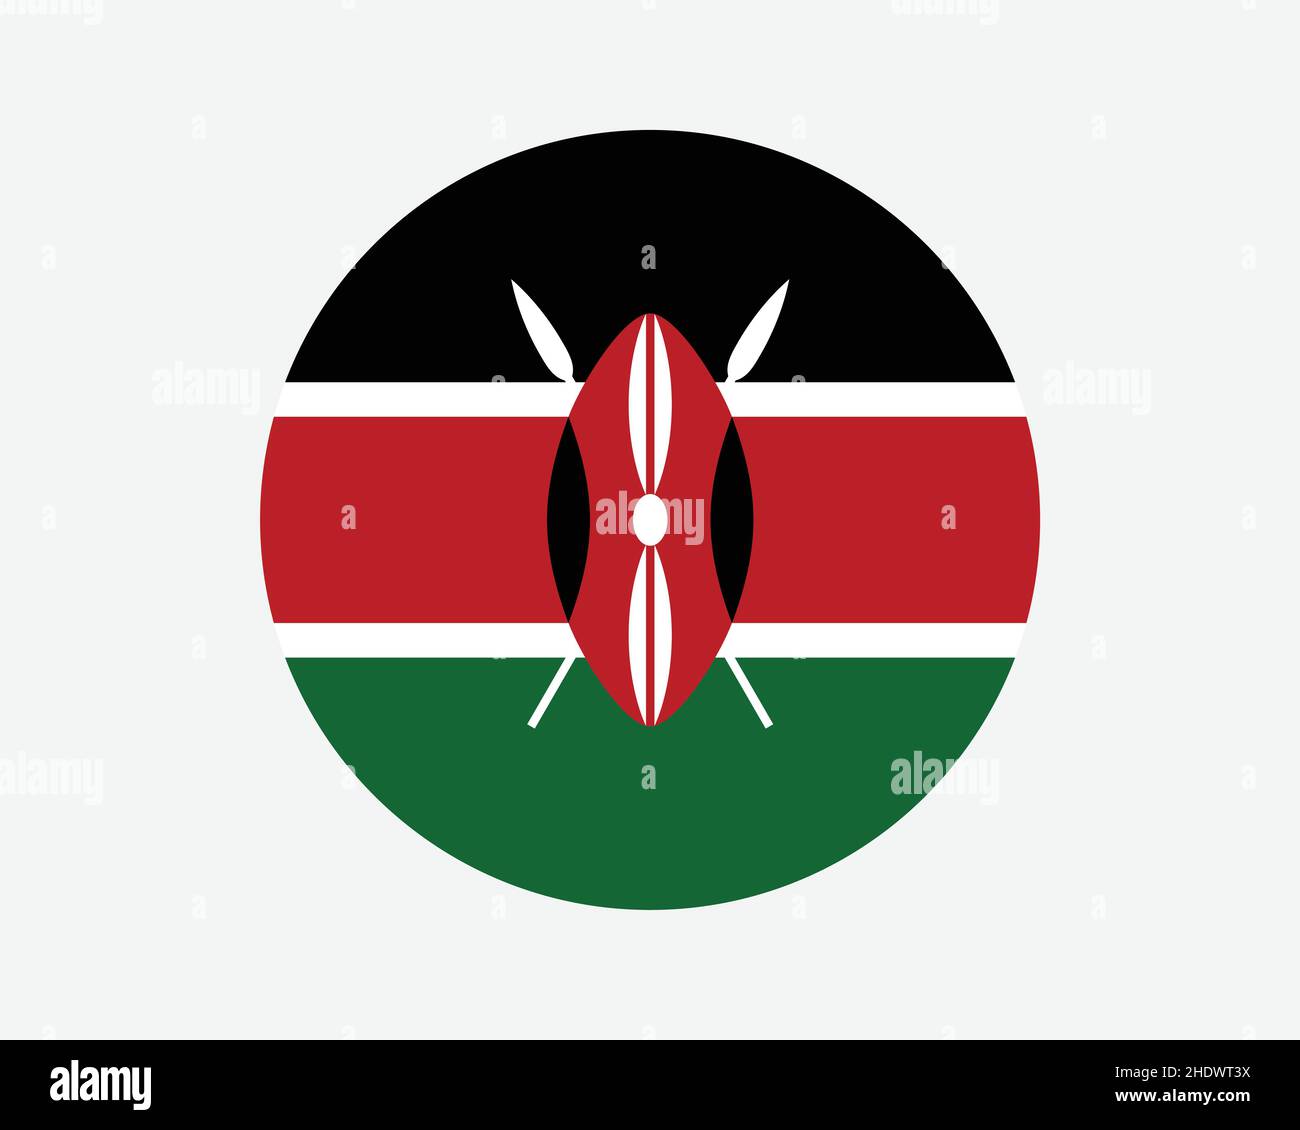 Kenia Round Country Flagge. Kenyan Circle National Flag. Kreisförmiges Knopfbanner der Republik Kenia. EPS-Vektorgrafik. Stock Vektor